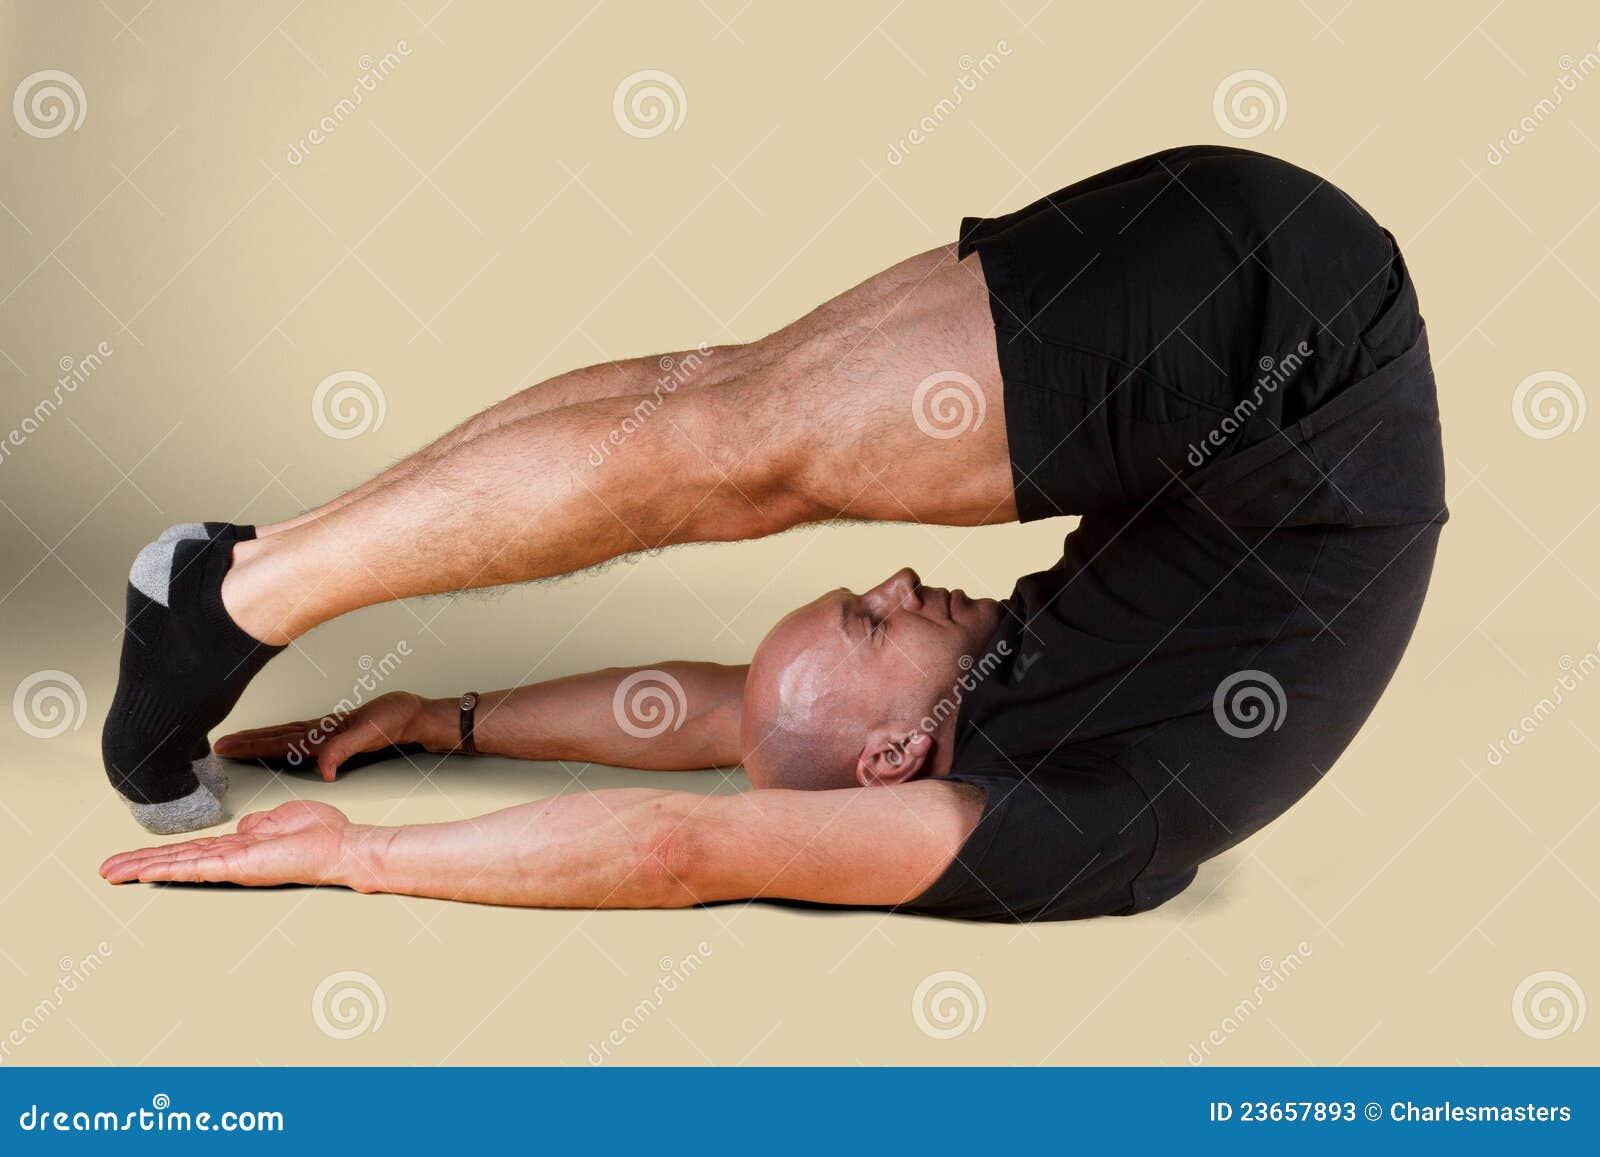 Pilates Position - Jack Knife Stock Image - Image of body, workout